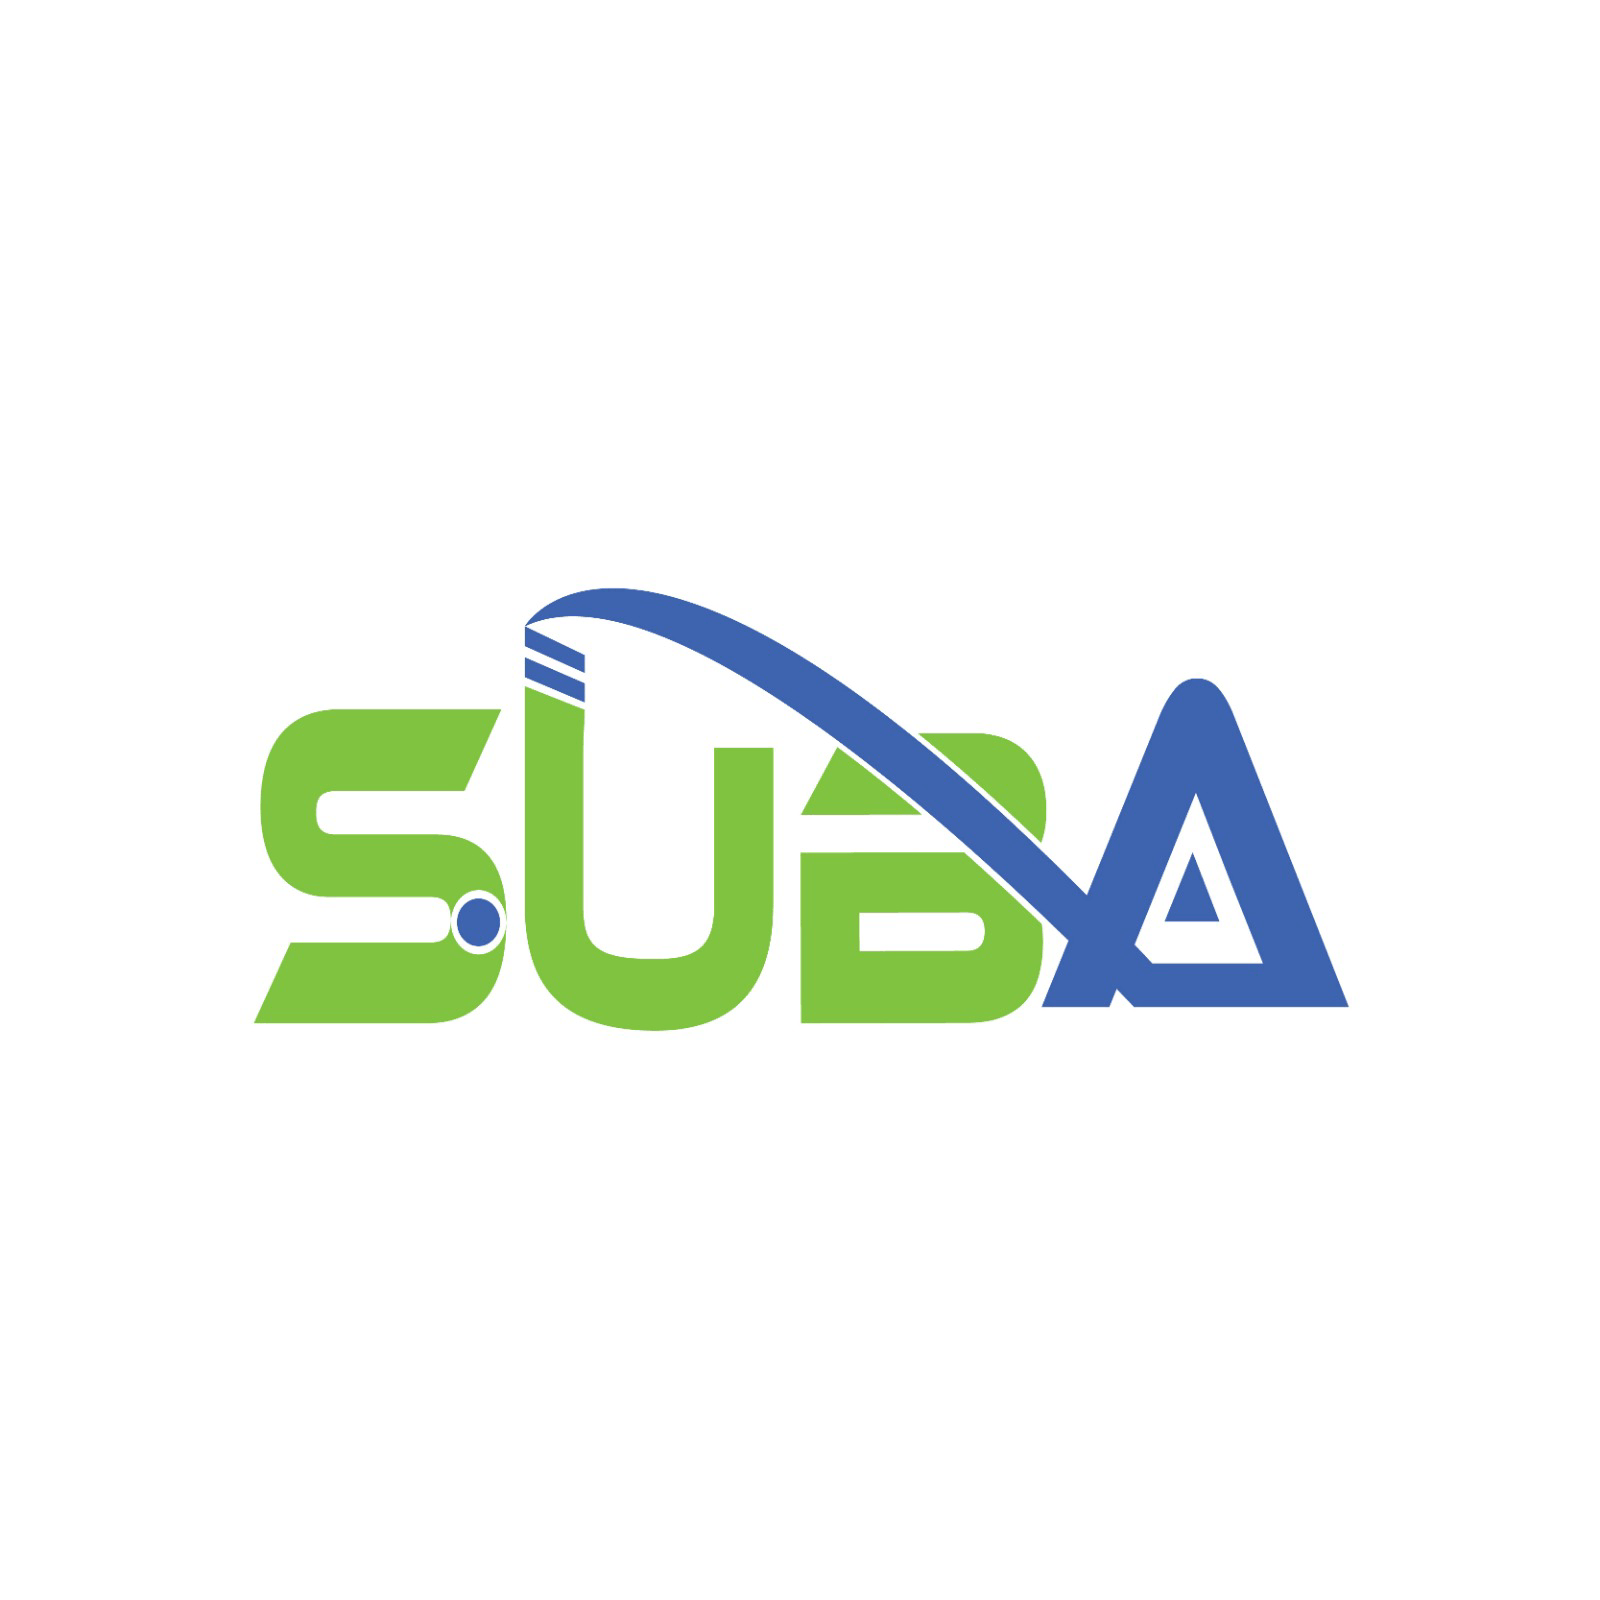 Suba Logo - Suba Limited Reviews | Read Customer Service Reviews of subaltd.com